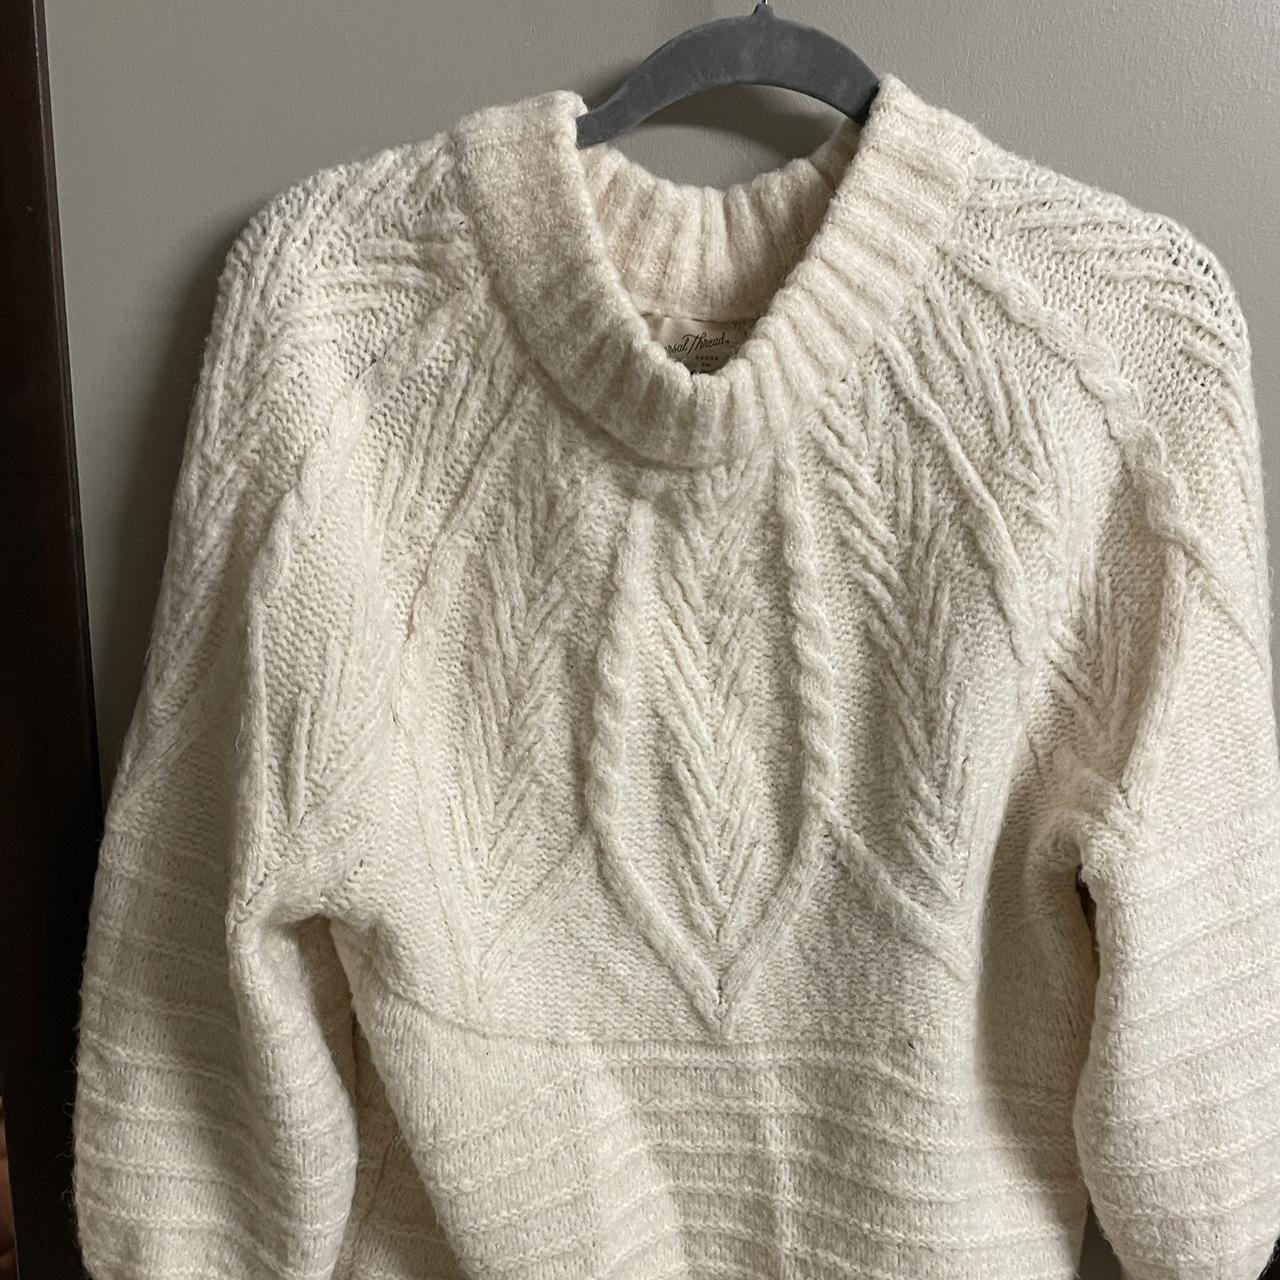 Sweater from Universal Thread (target) Runs very... - Depop